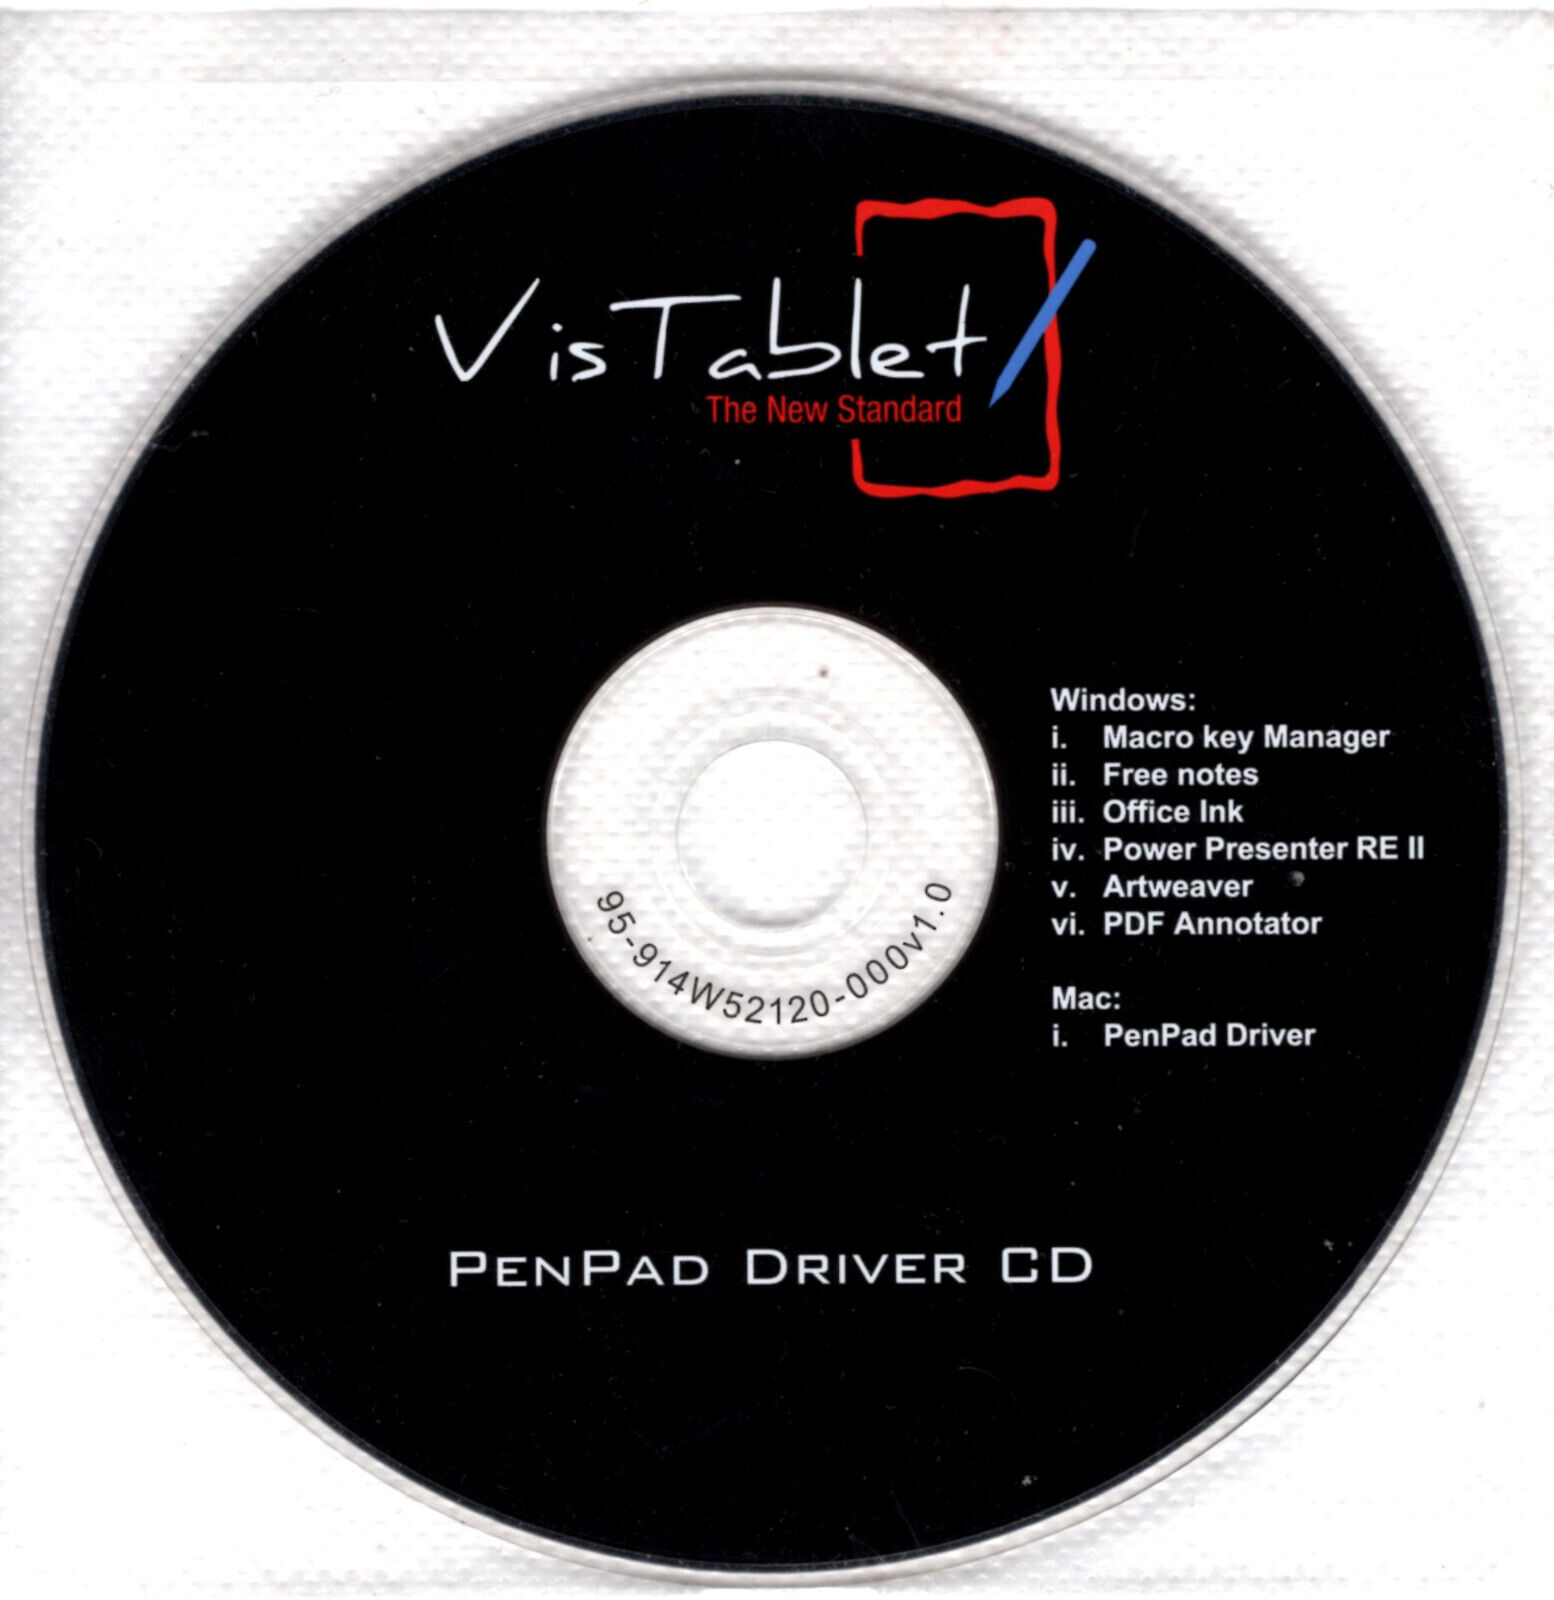 VISTABLET PENPAD DRIVER CD FOR WINDOWS AND MAC - NEW